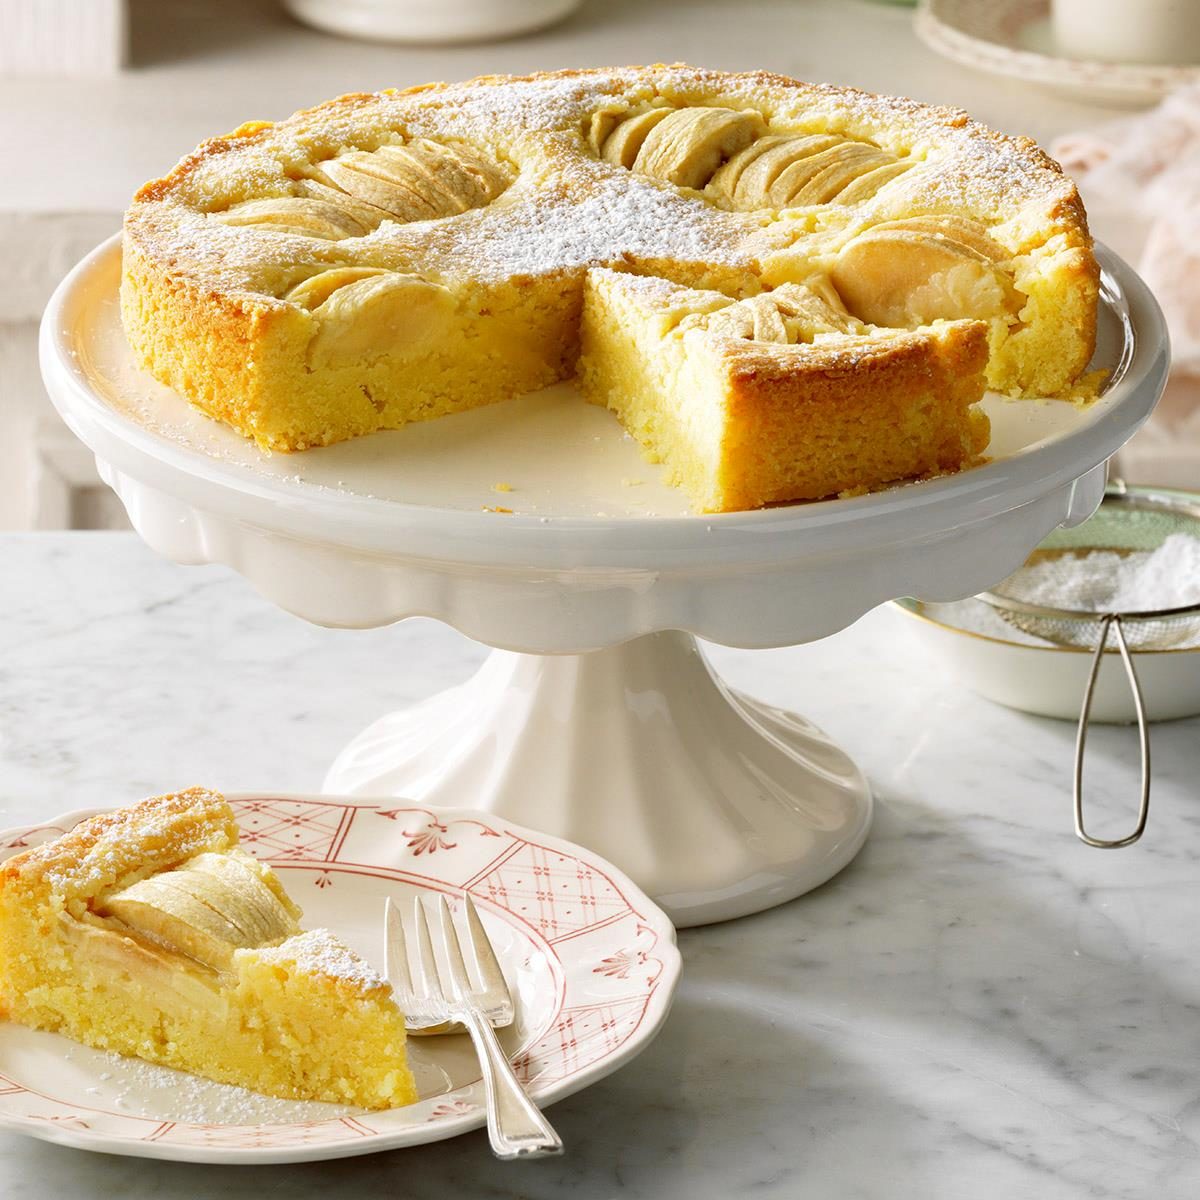 Oma&amp;#39;s Apfelkuchen (Grandma&amp;#39;s Apple Cake) Recipe: How to Make It | Taste ...